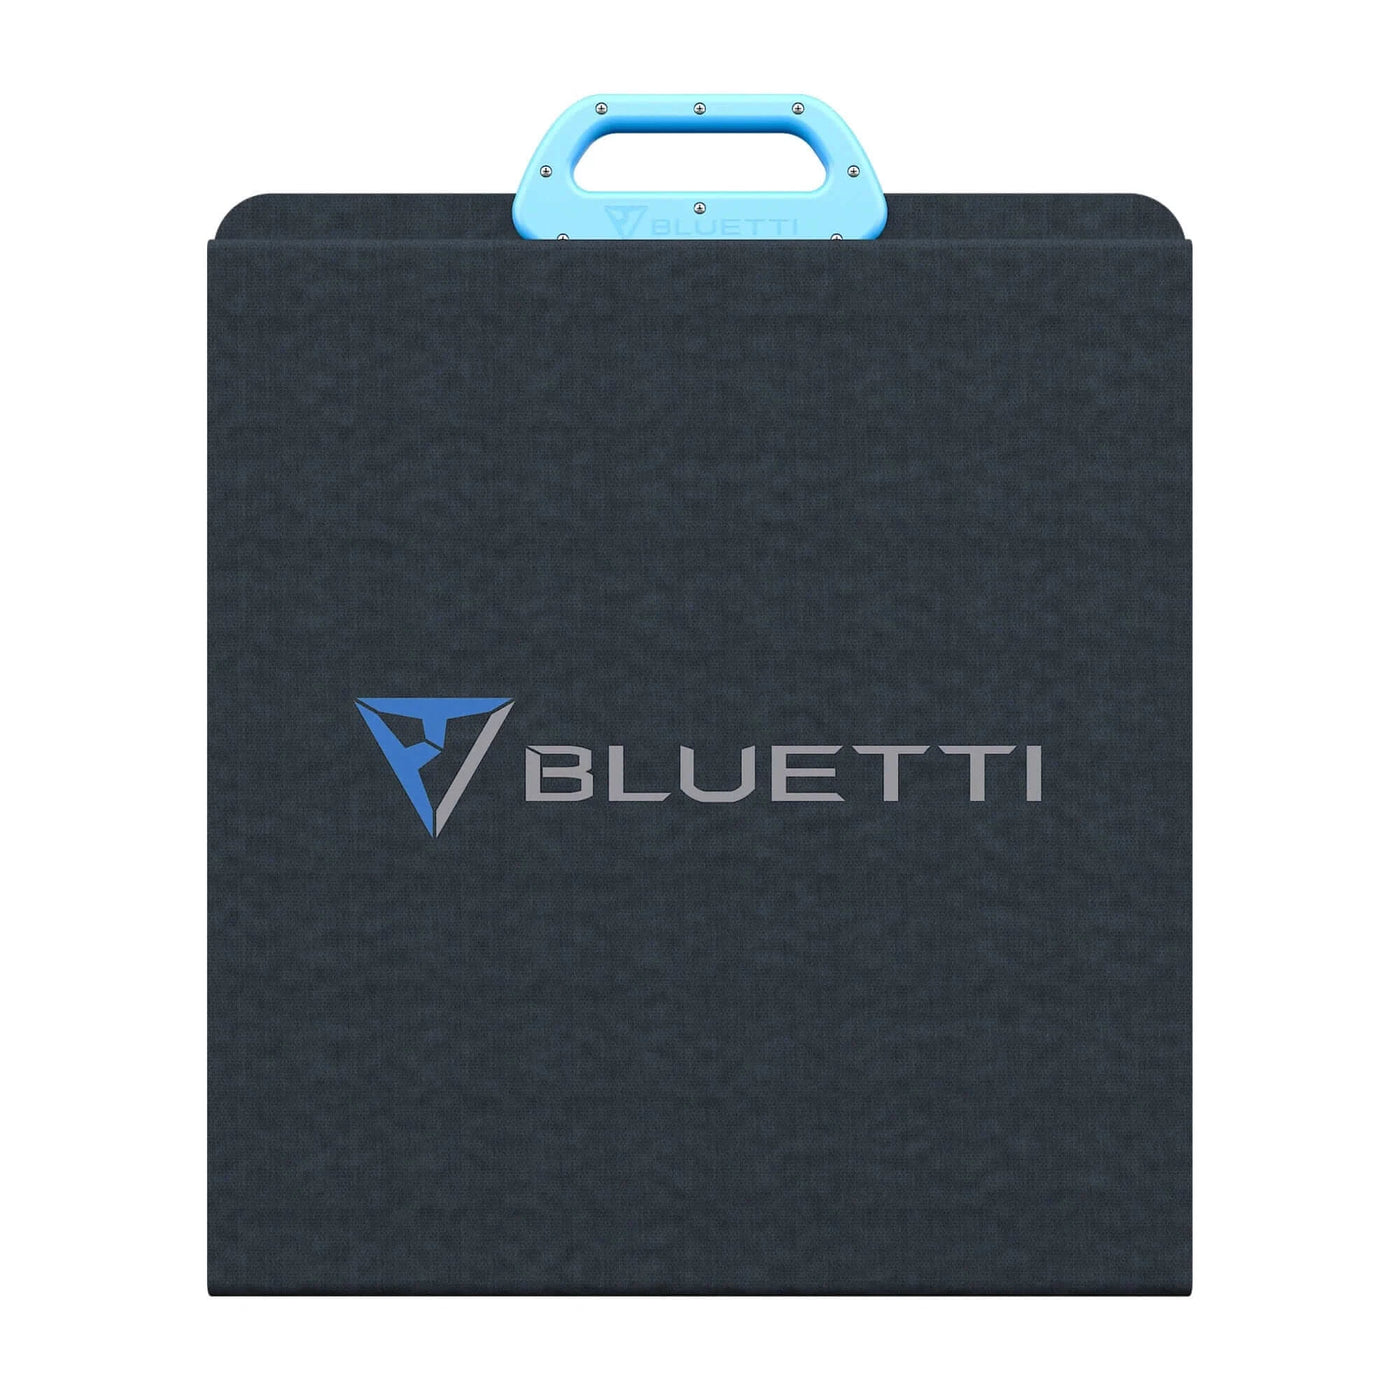 200 Watt Portable Solar Panel: Bluetti PV200 - Folded and Compact